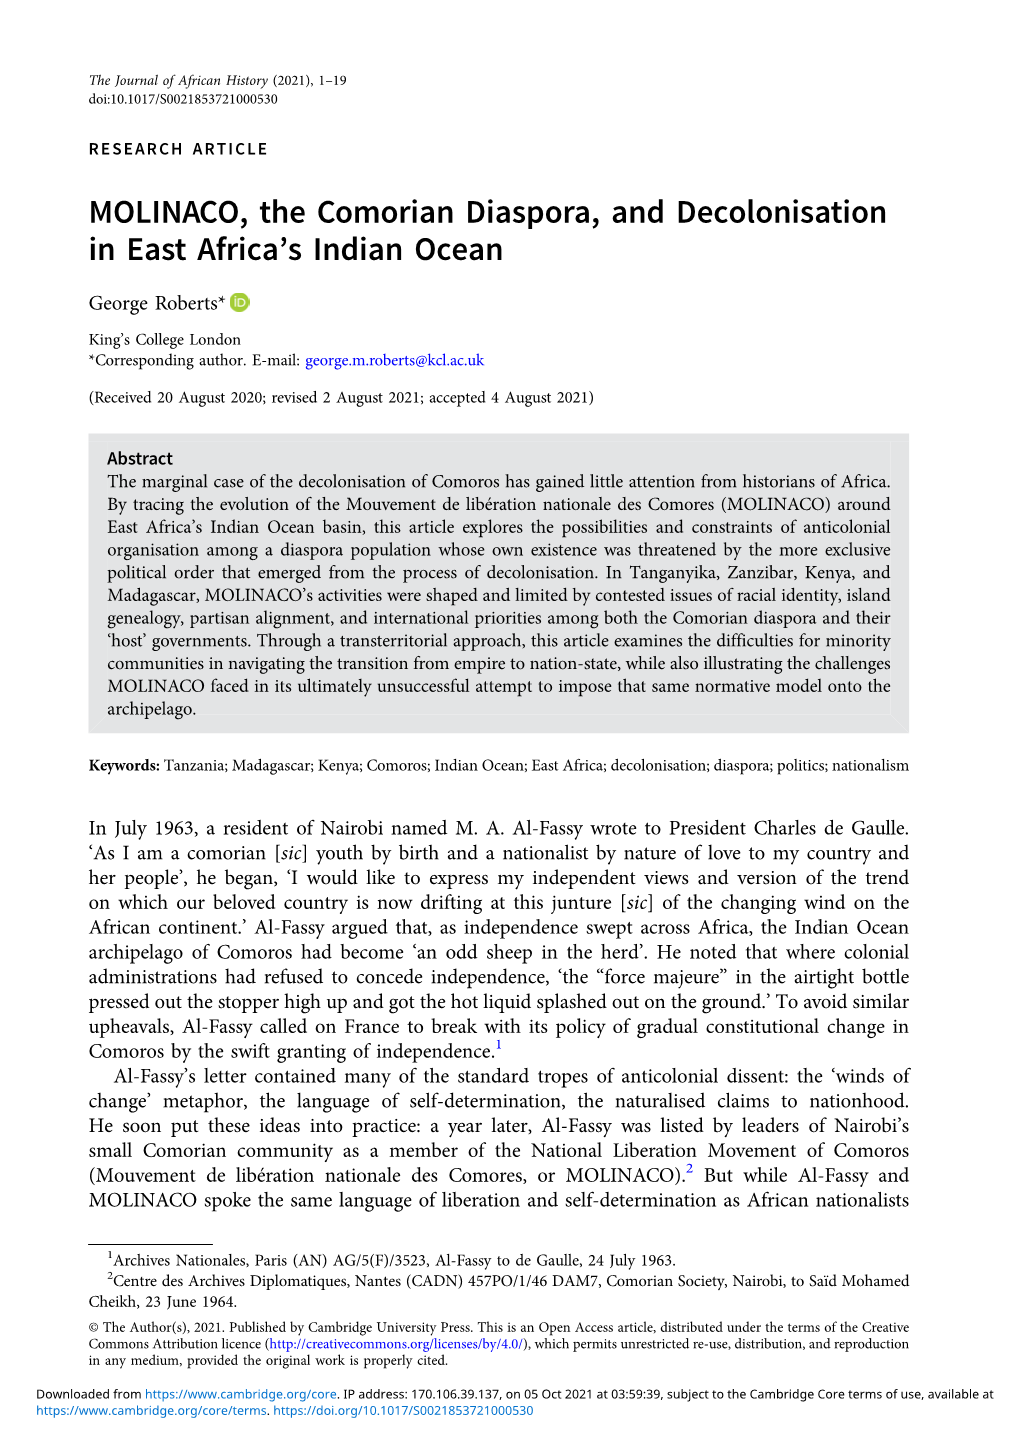 MOLINACO, the Comorian Diaspora, and Decolonisation in East Africa's